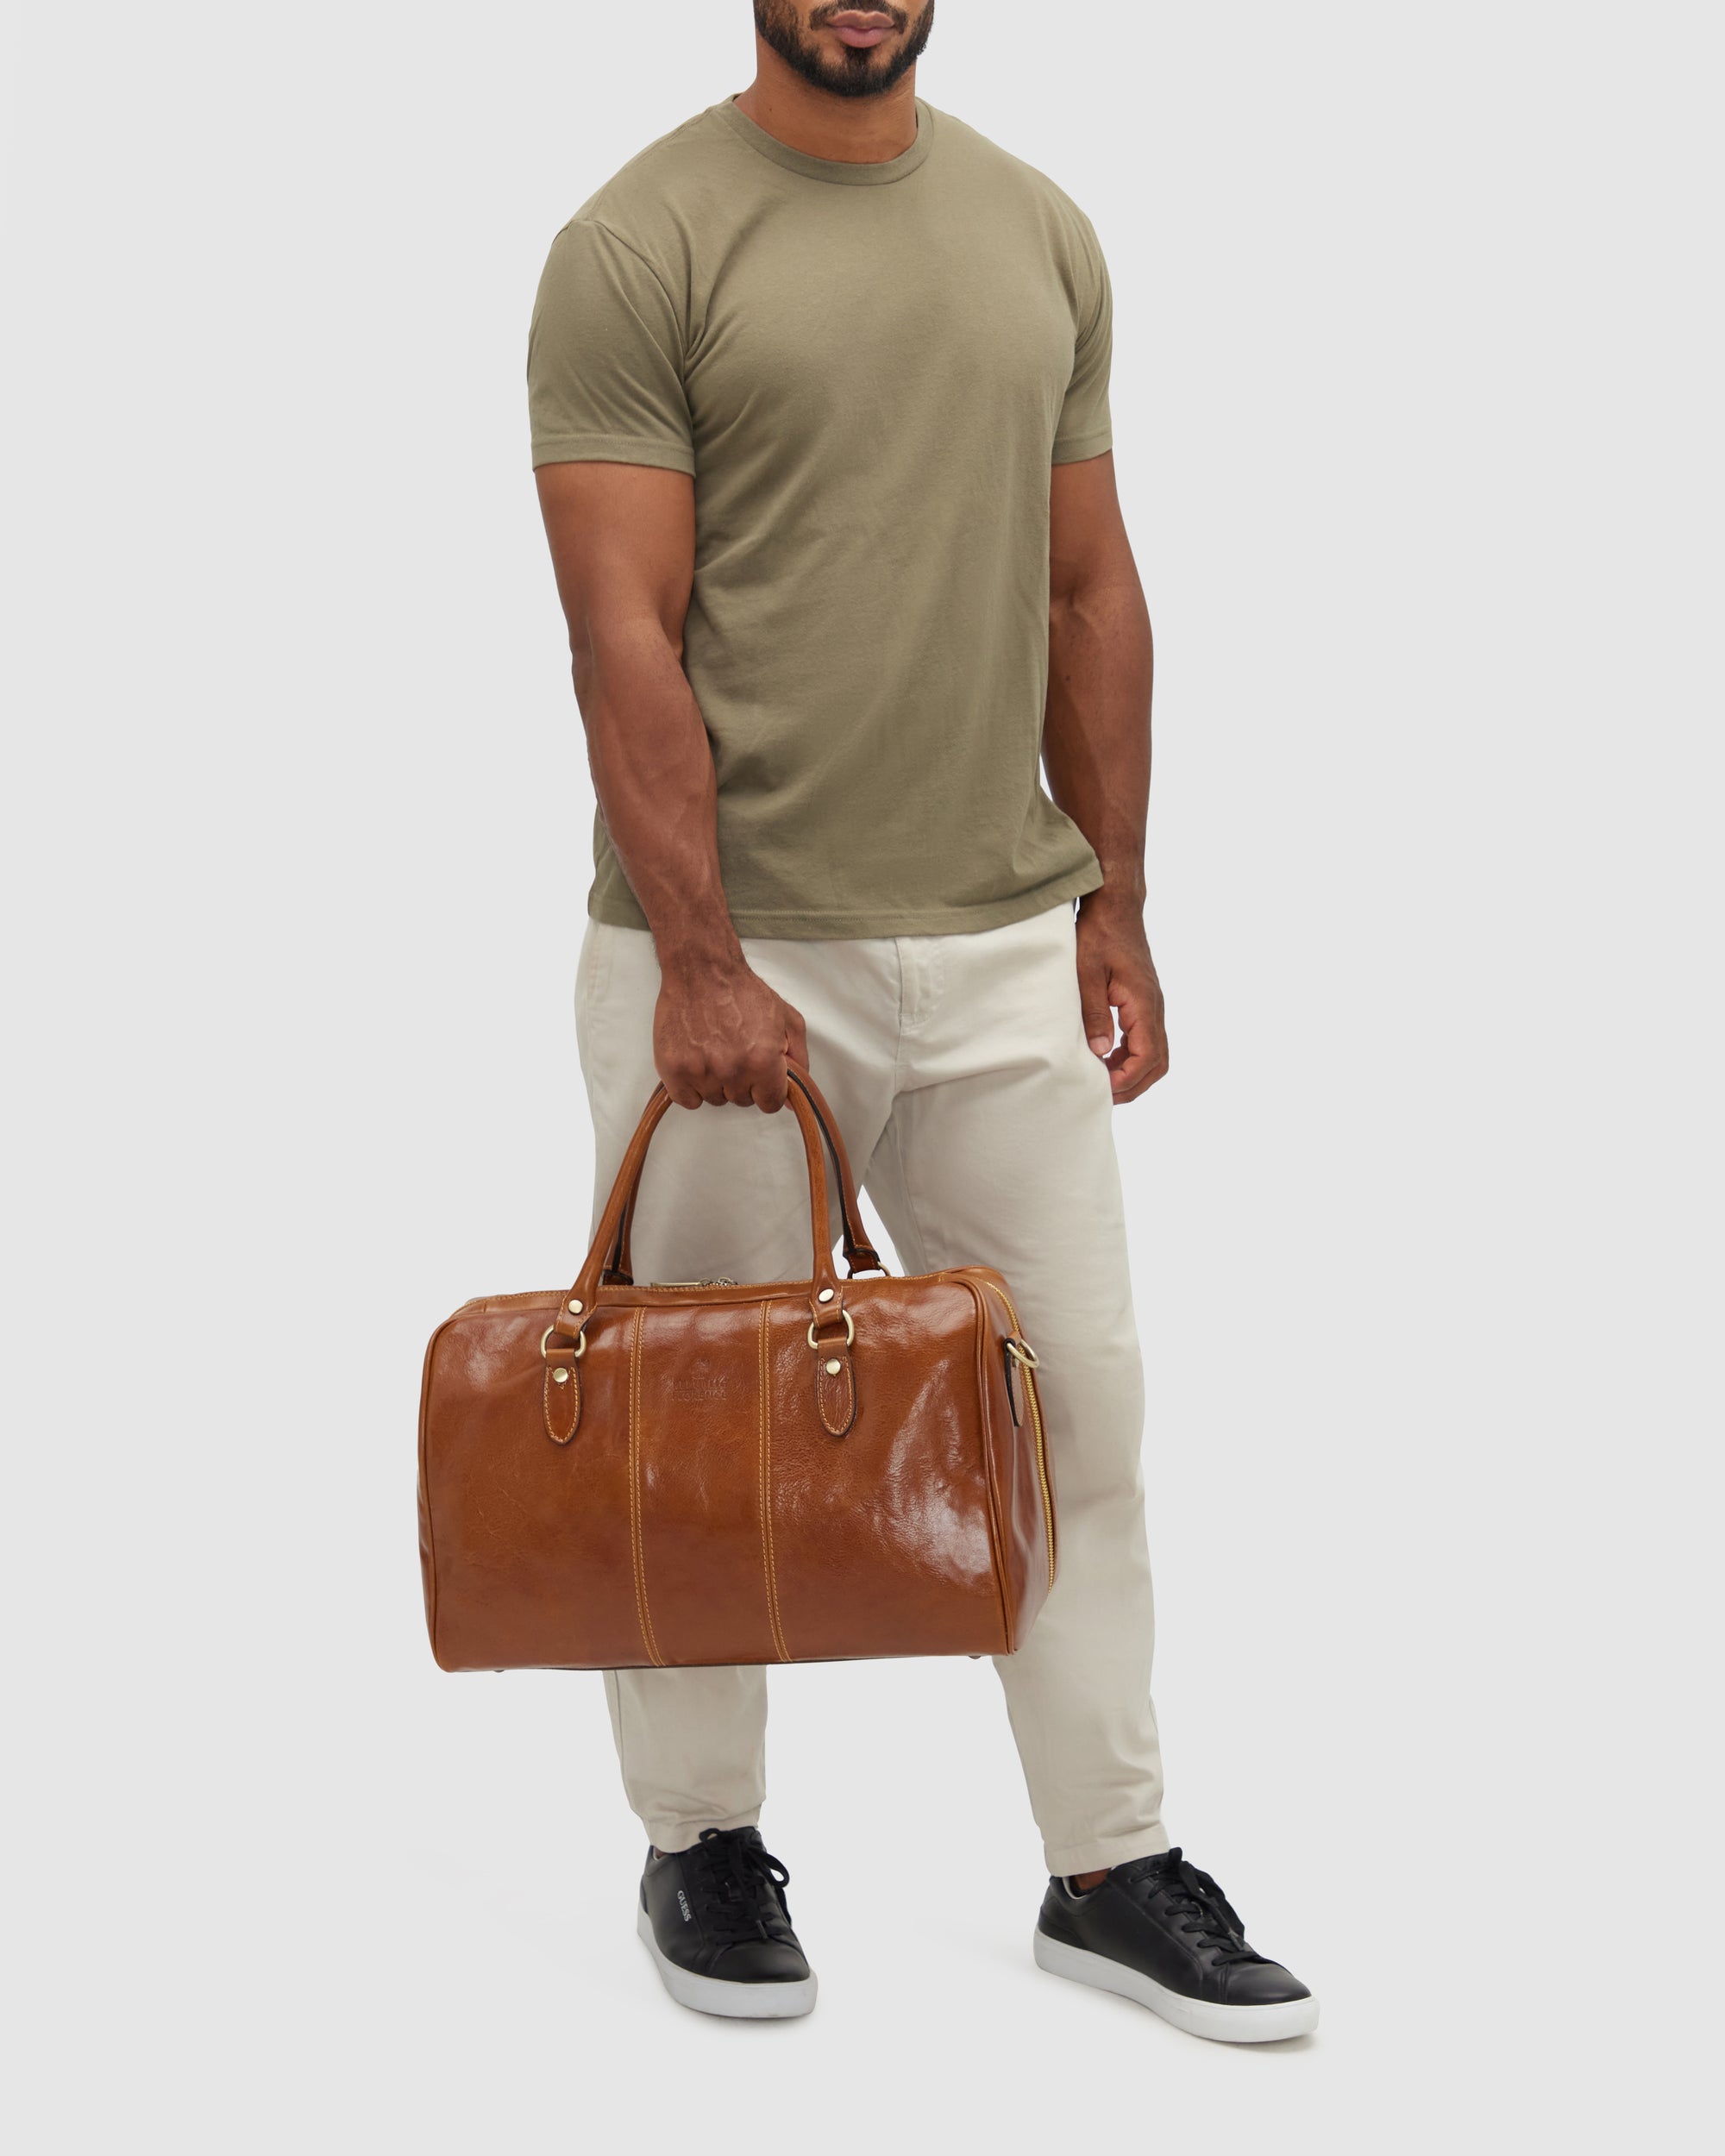 Albertis Piccolo Tan - Leather Duffle Bag